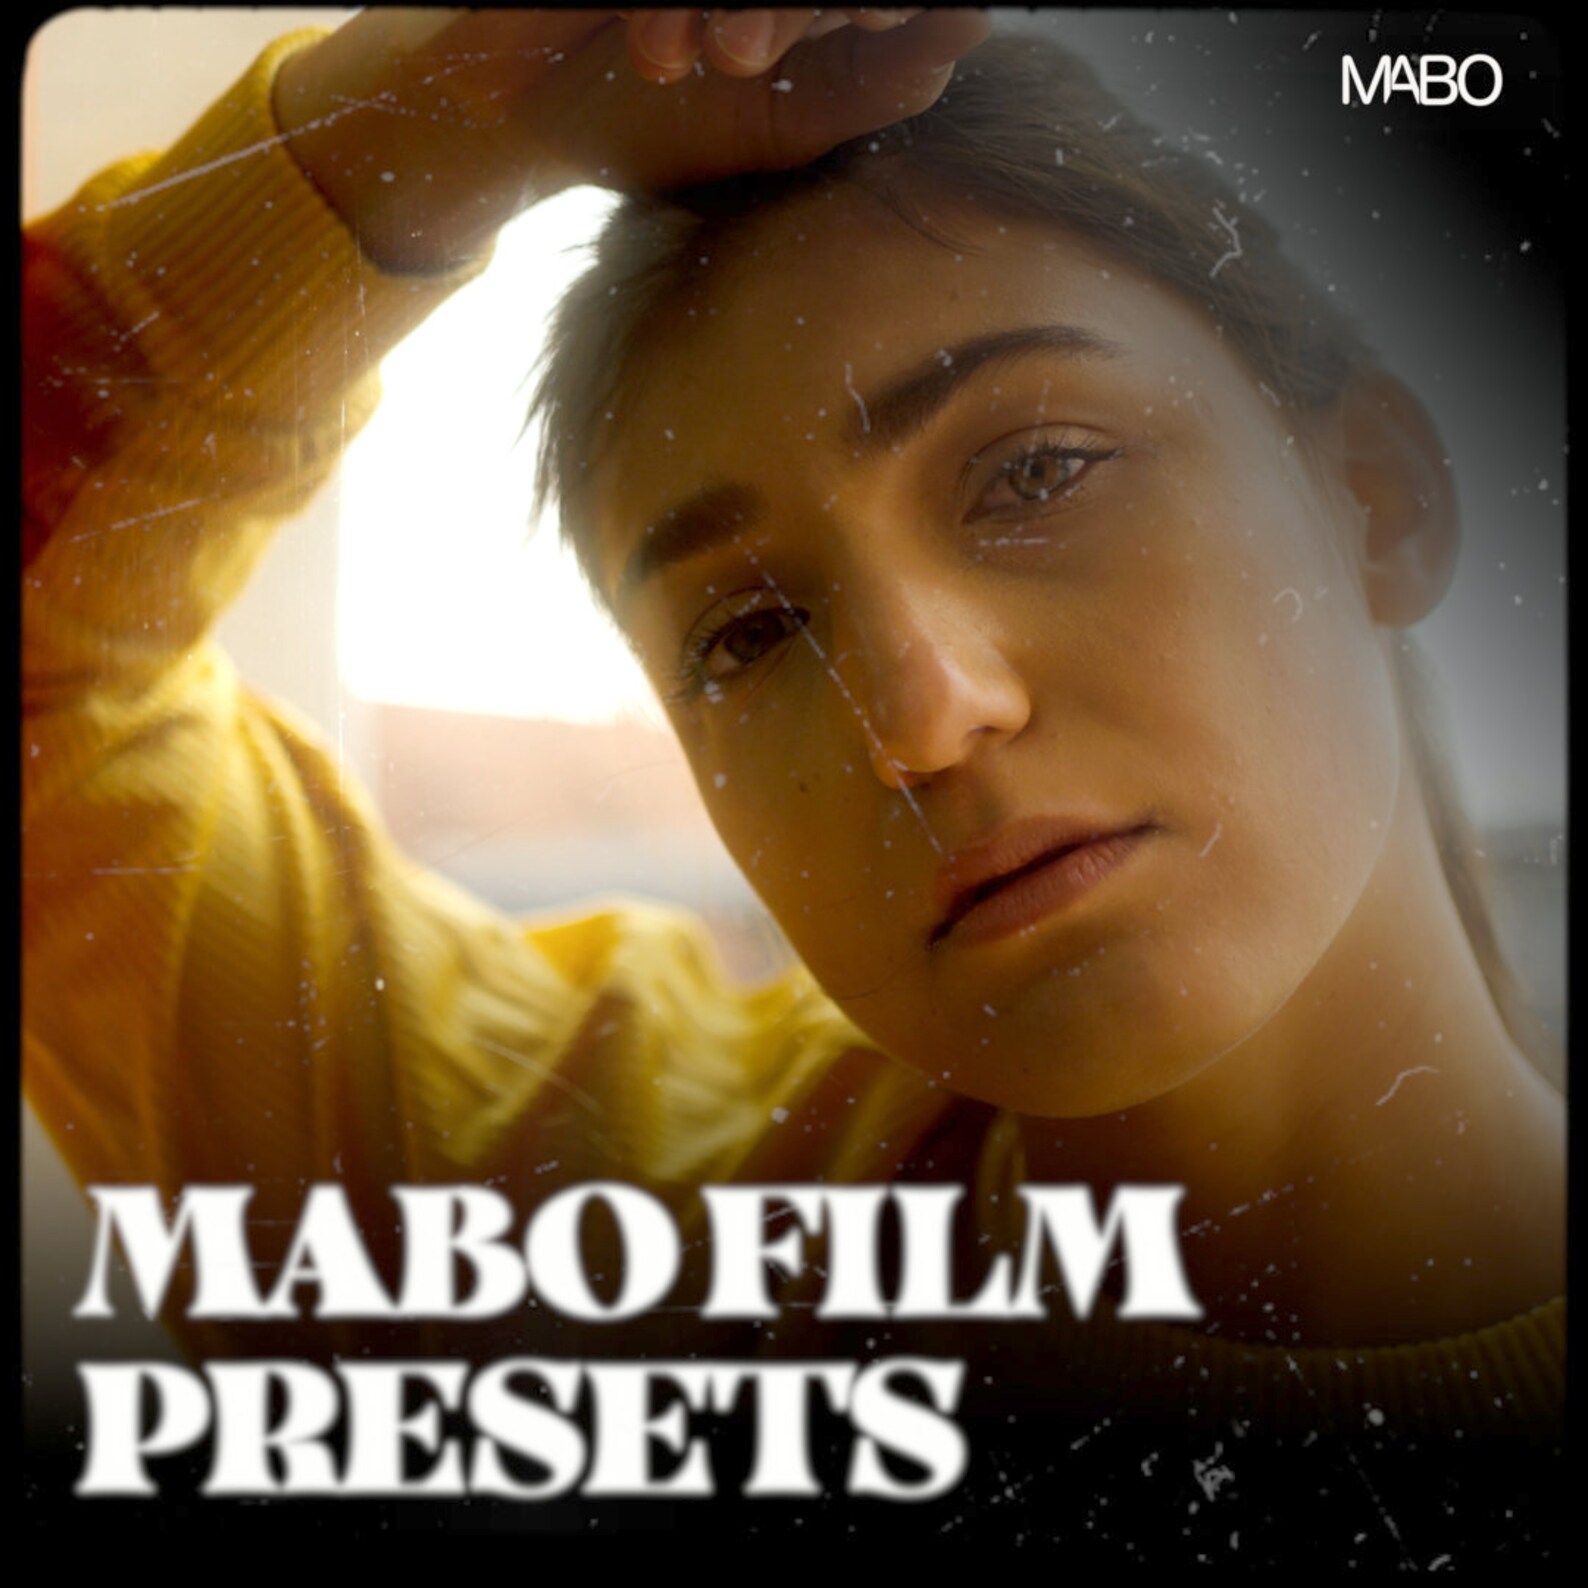 MABO Film Presets 5个复古高级电影质感人像PS/LR预设 插件预设 第1张